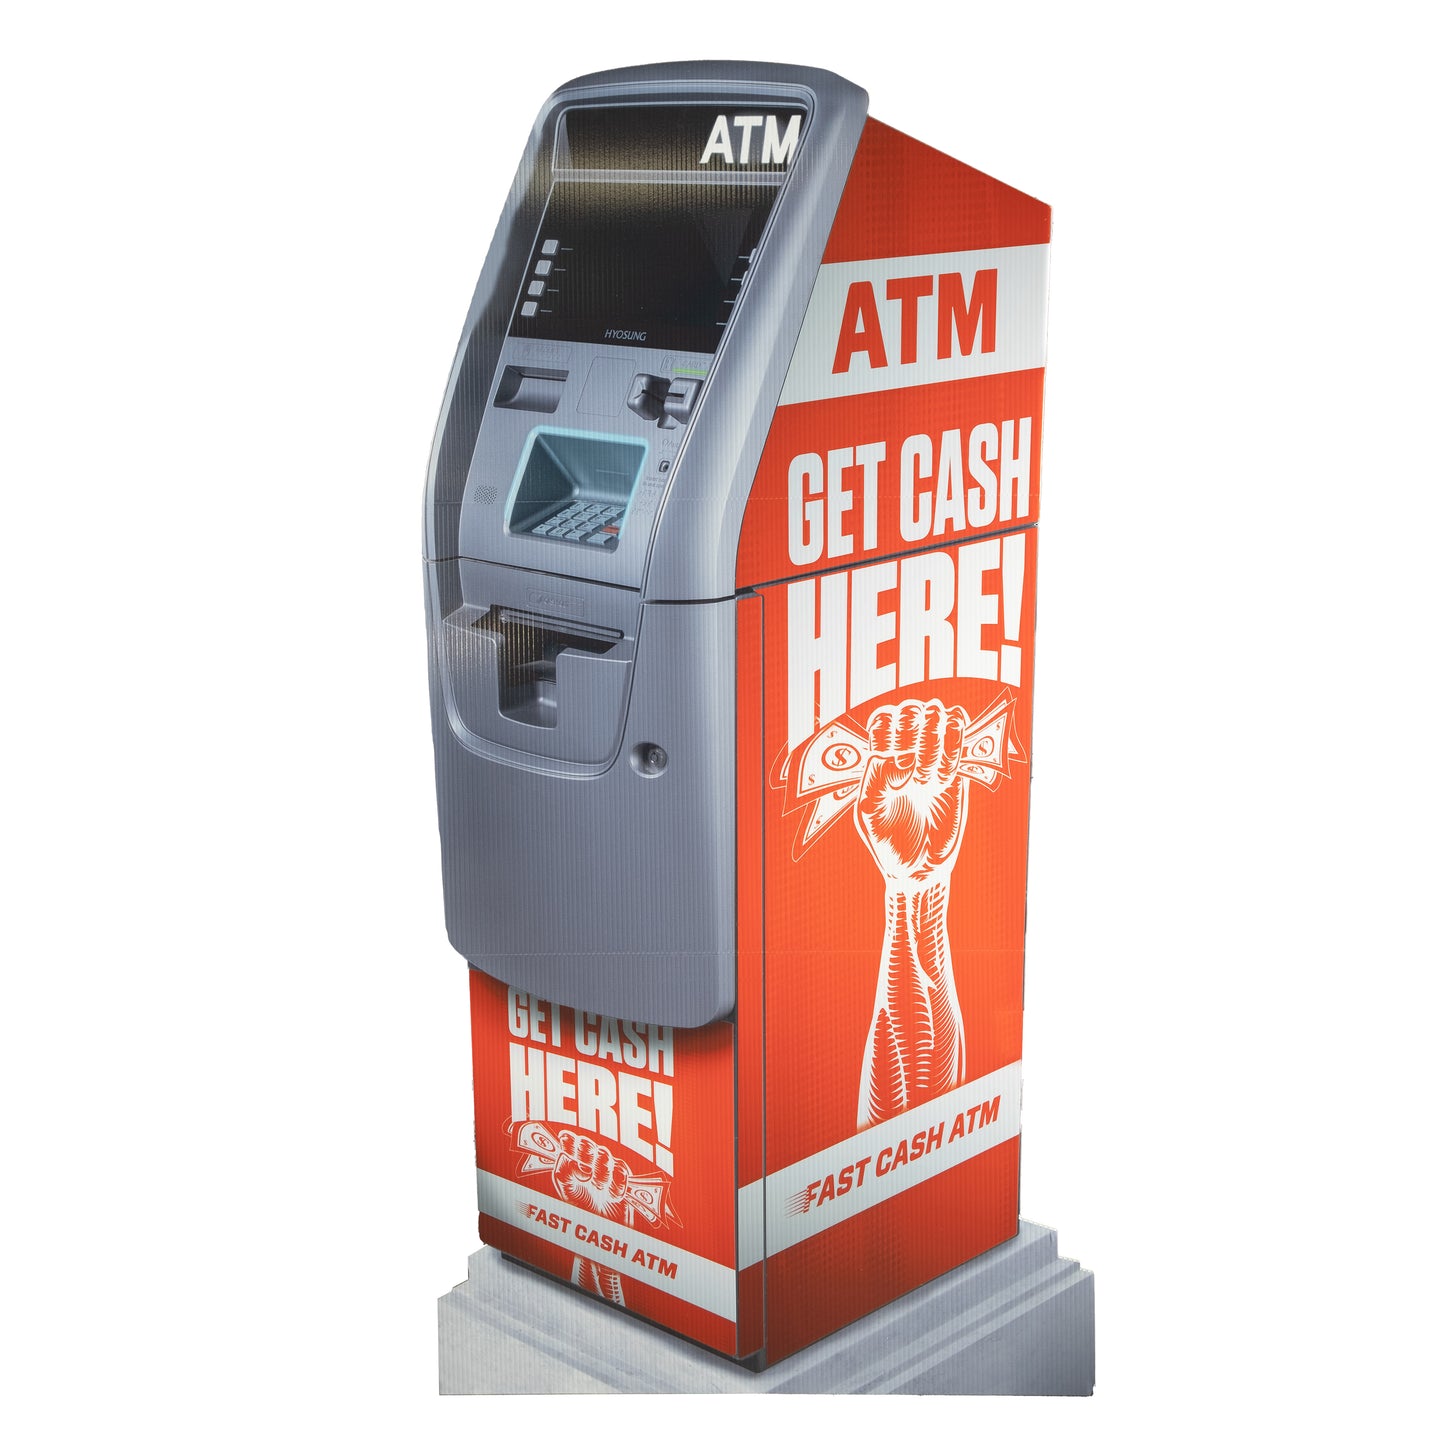 ATM/Kiosk Standee Example 3.